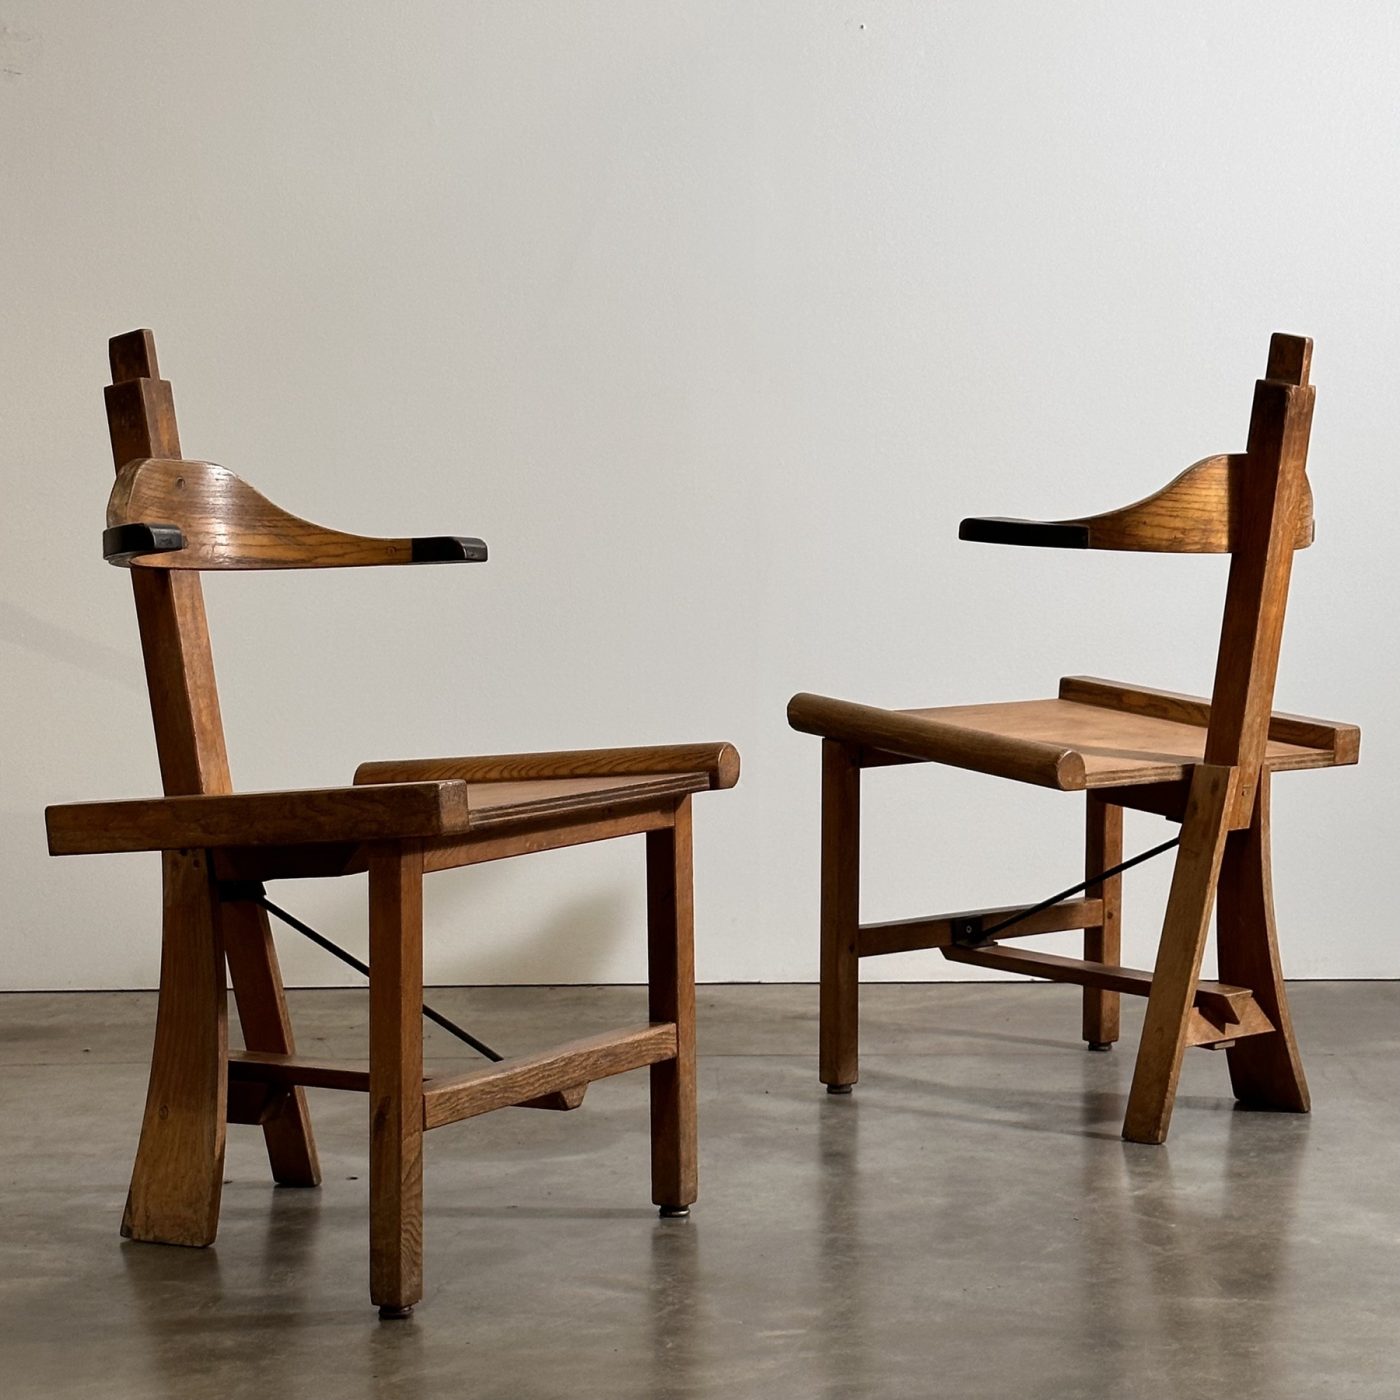 objet-vagabond-curious-chairs0009